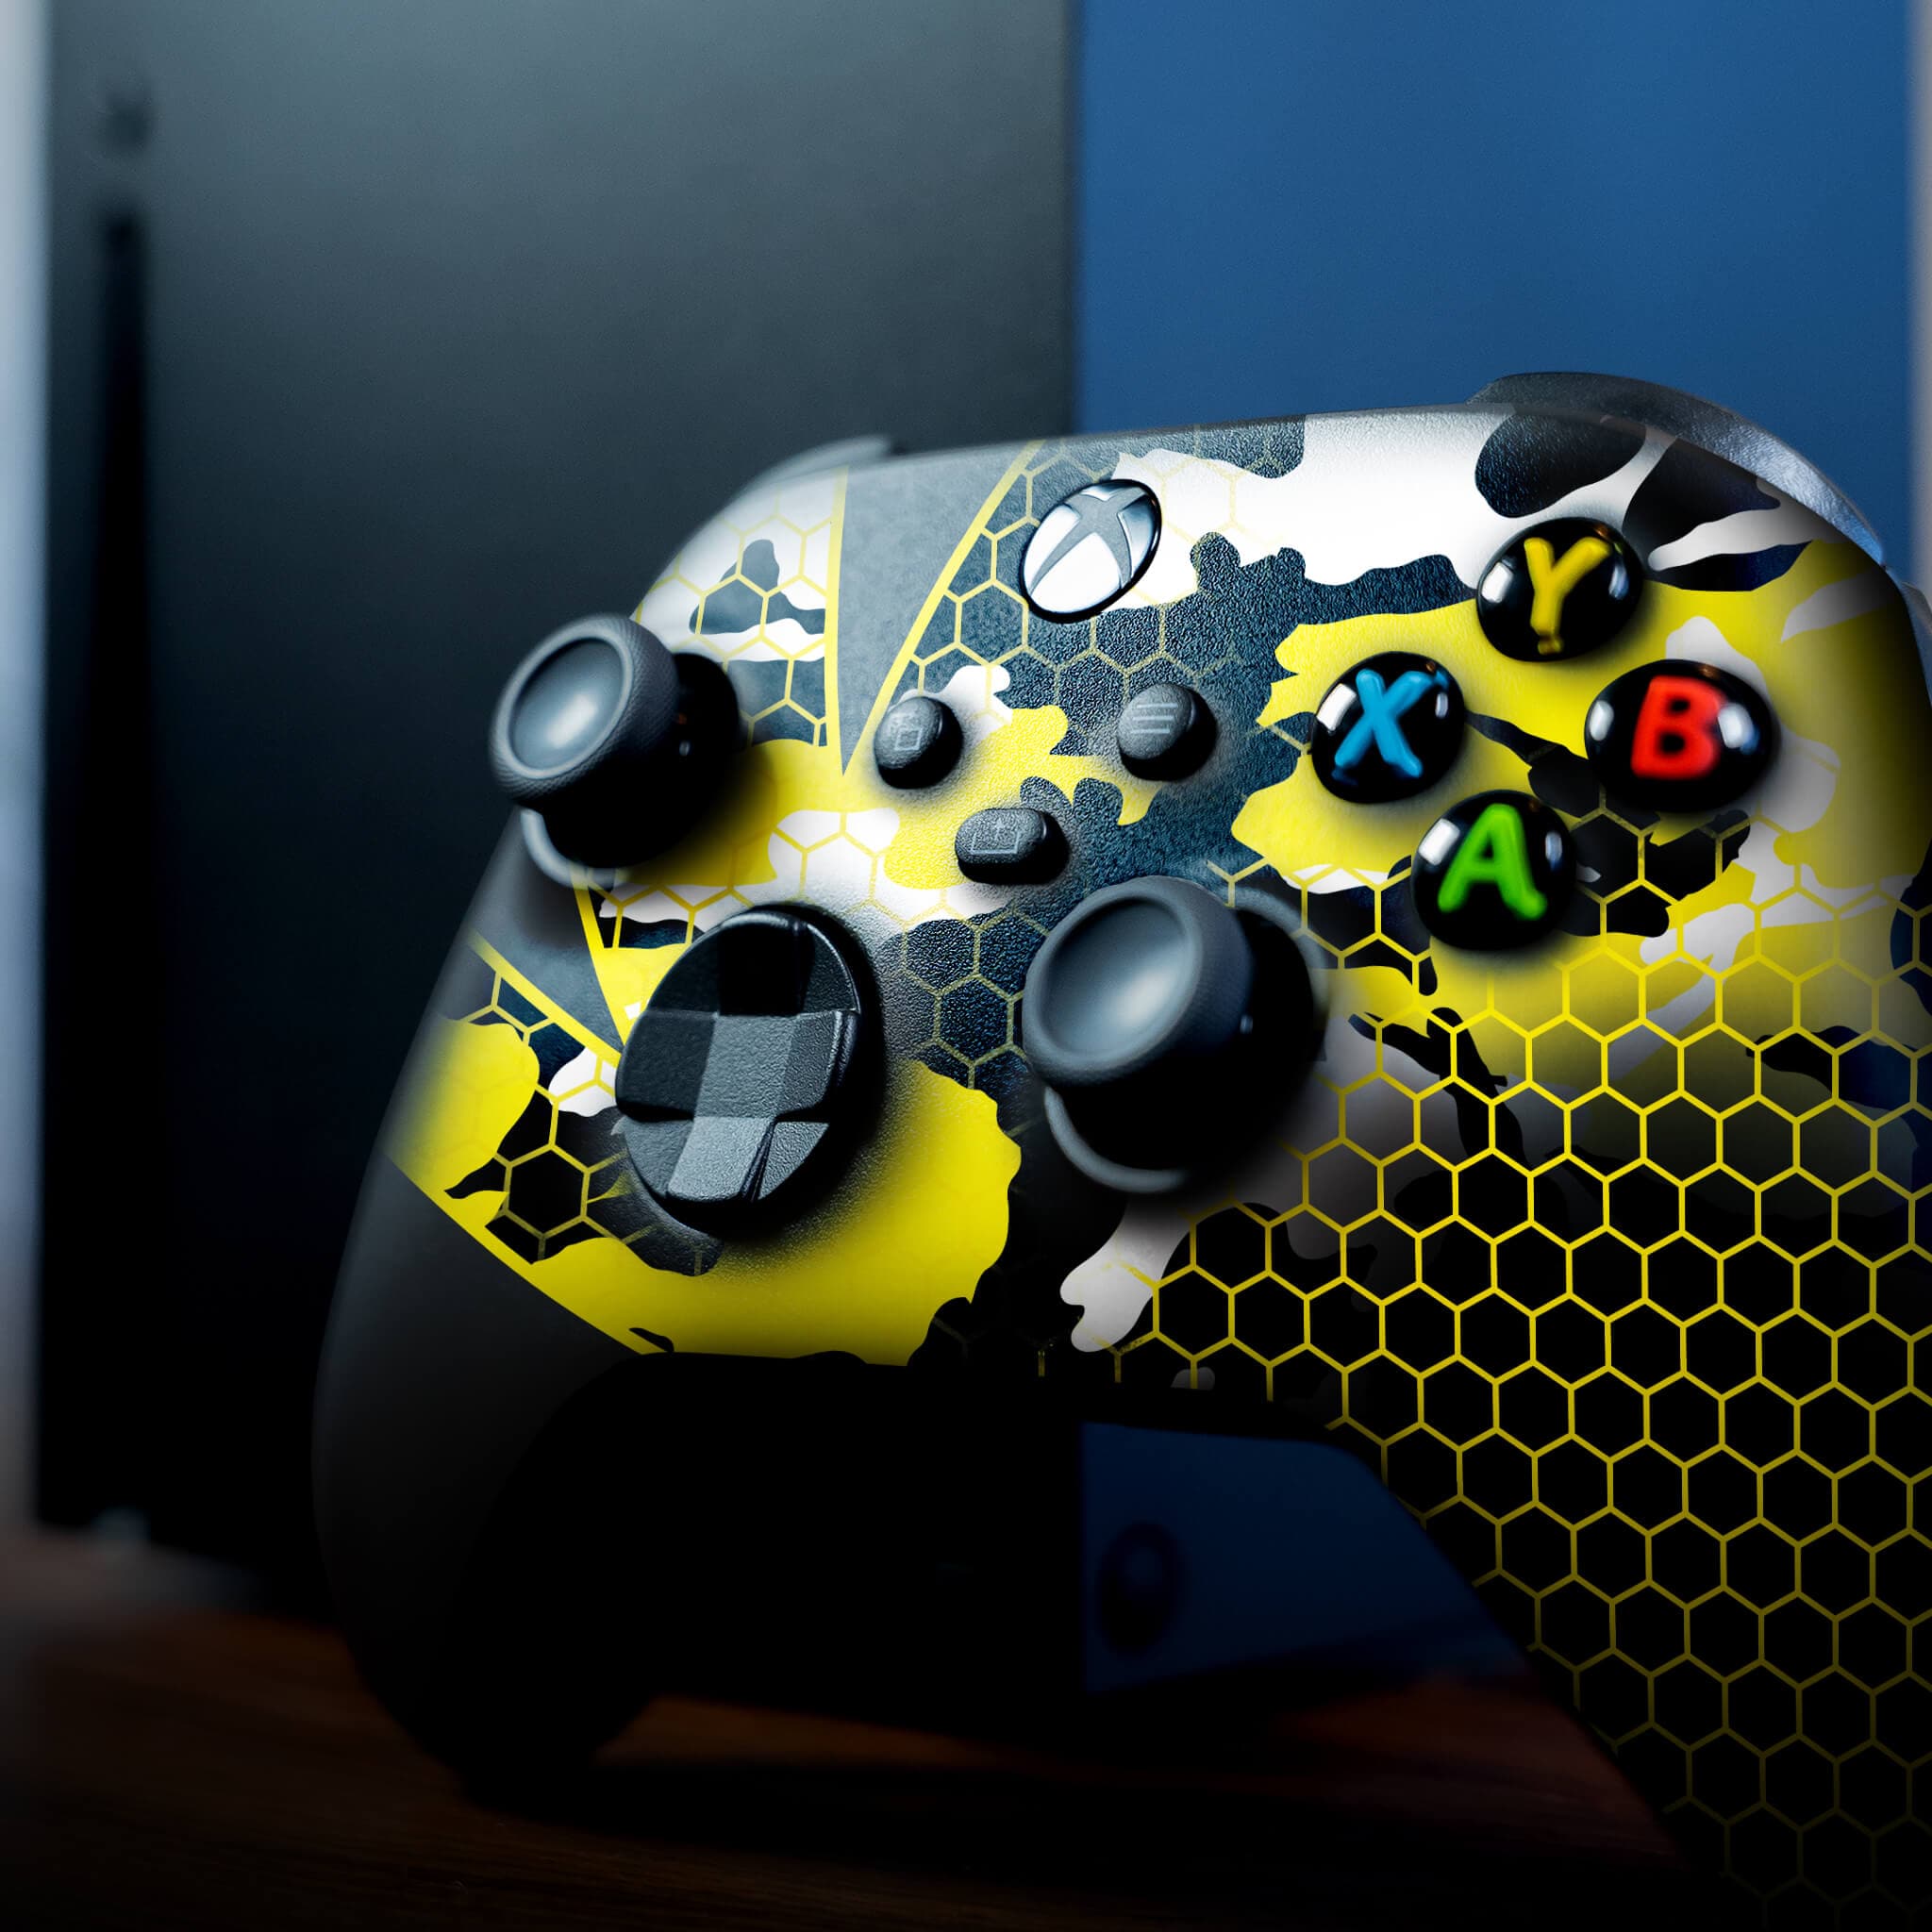 Fortnite Yellow Xbox Series X Controller